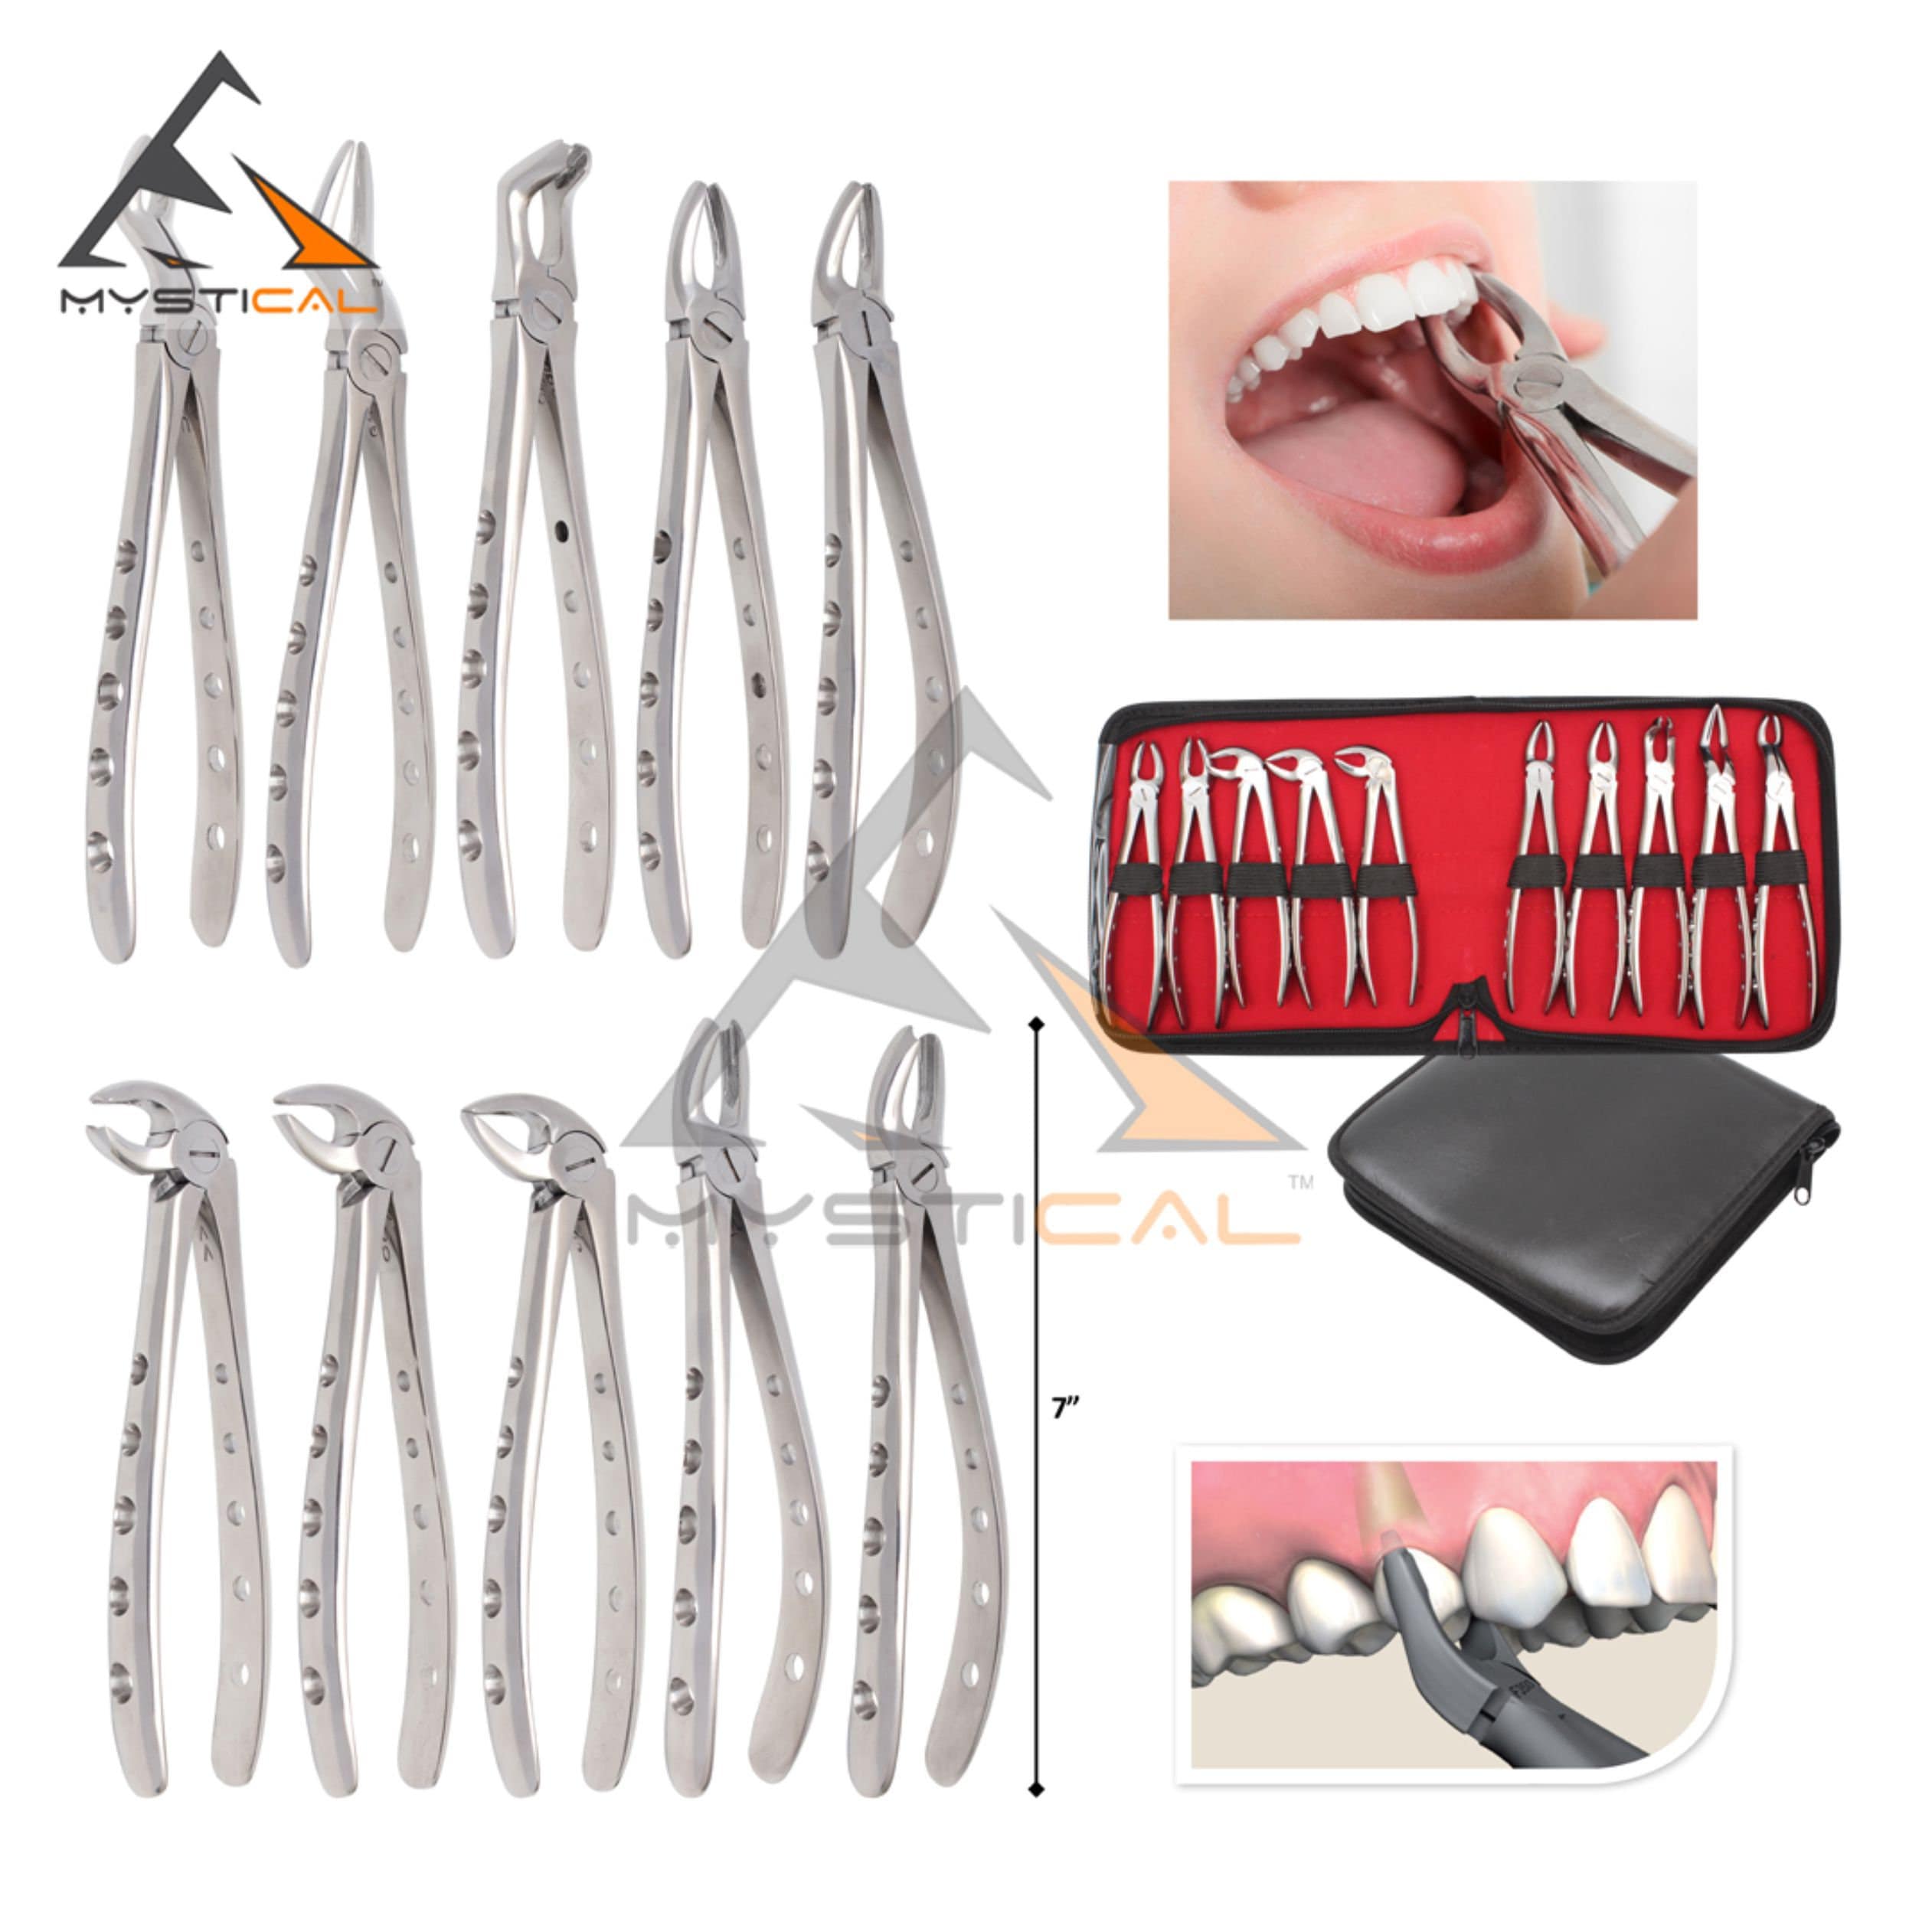 Dental Surgical Tissue Tweezer Dental Forcep Extraction Hemostat Medical Tweezers  Round Tip Straight 12cm Dental Surgery Tool